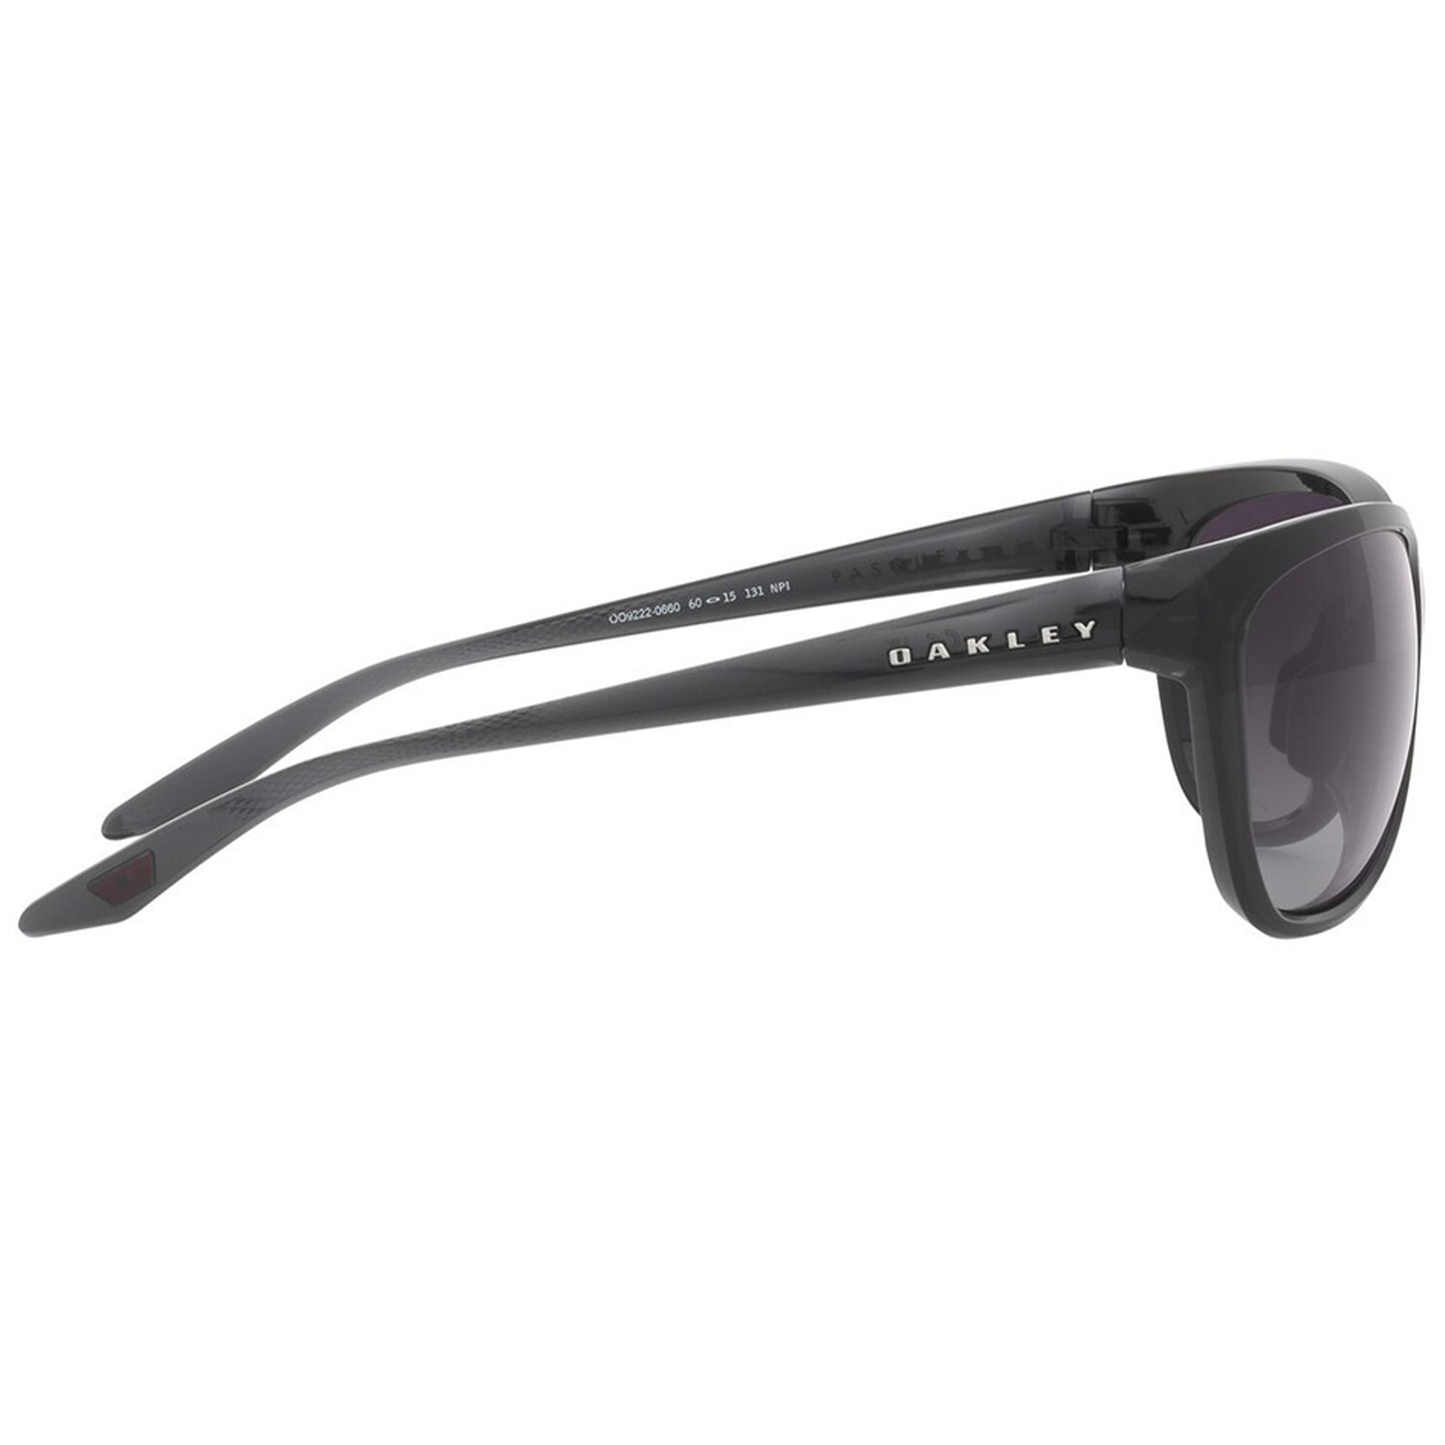 Oakley Pasque Sunglasses (Black Ink) Prizm Grey Gradient Lens